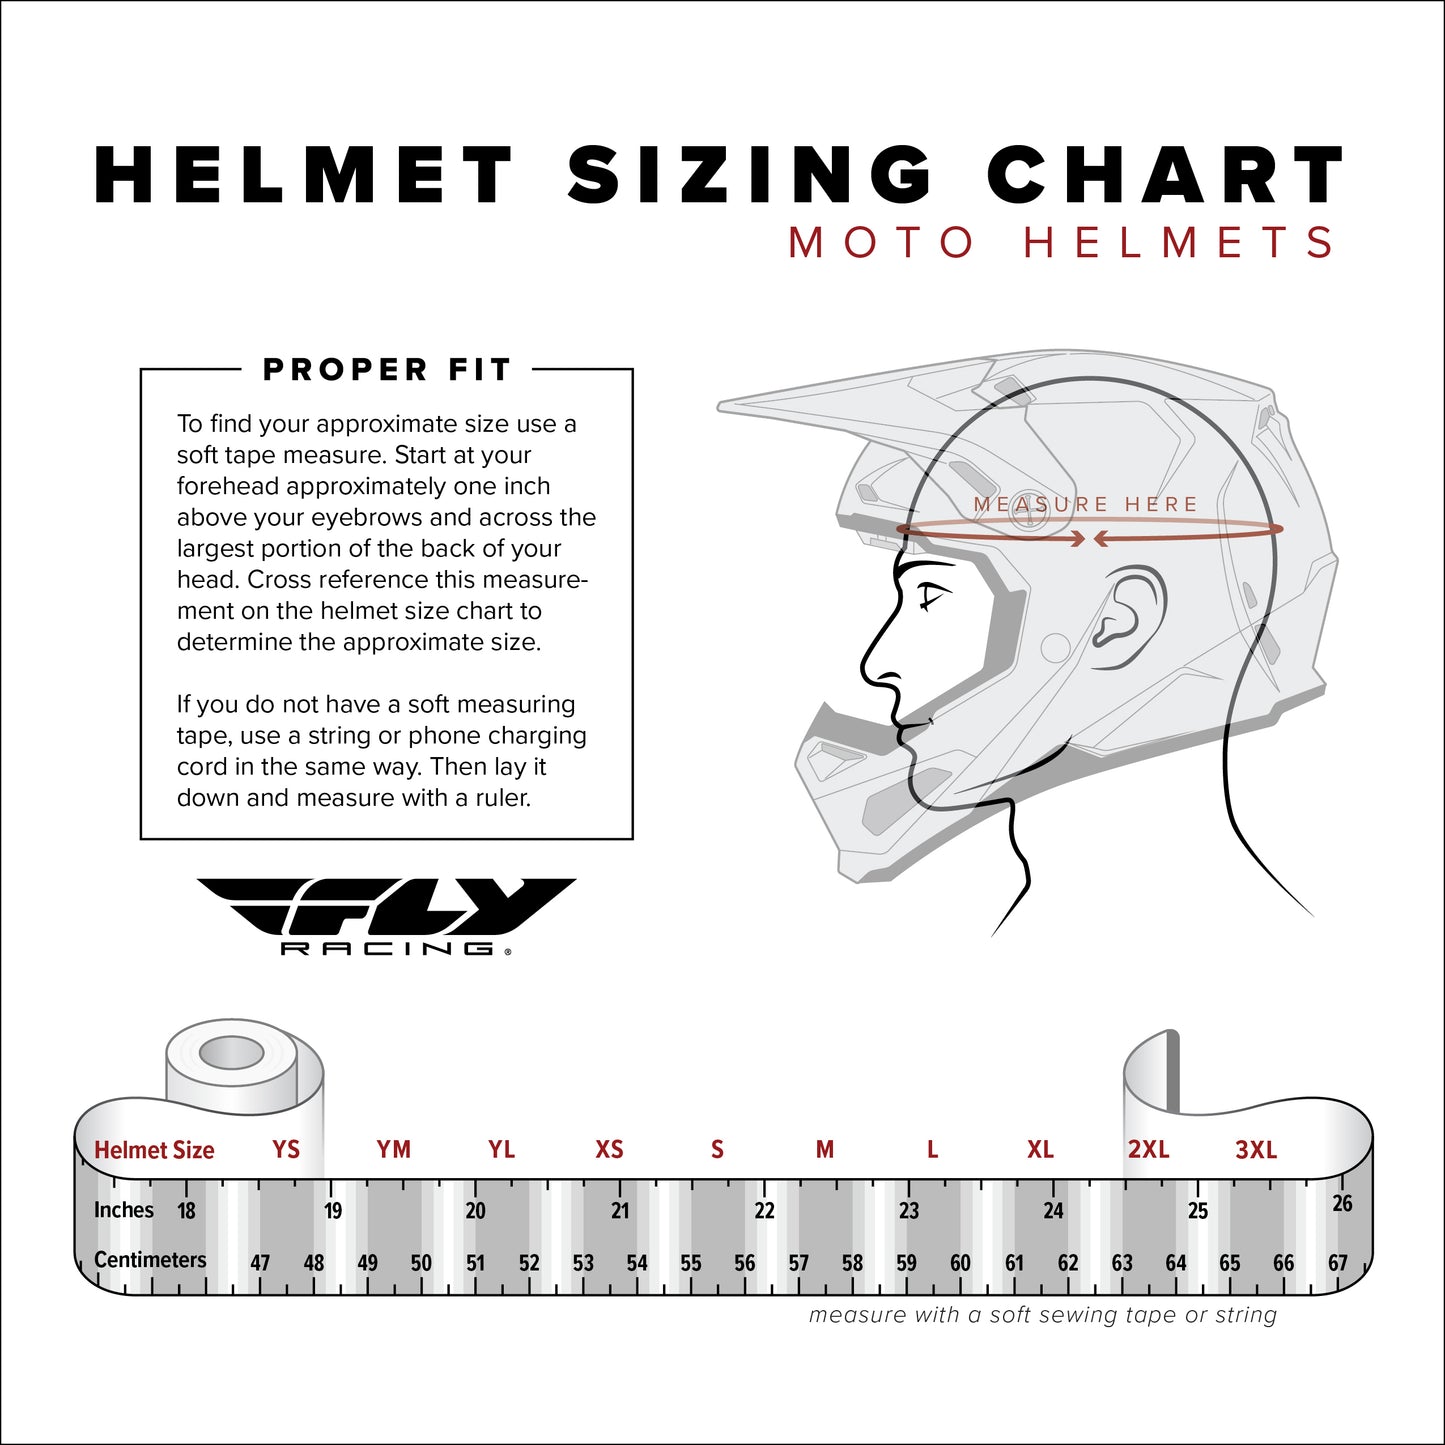 Fly Racing Helmet Formula CP Solid